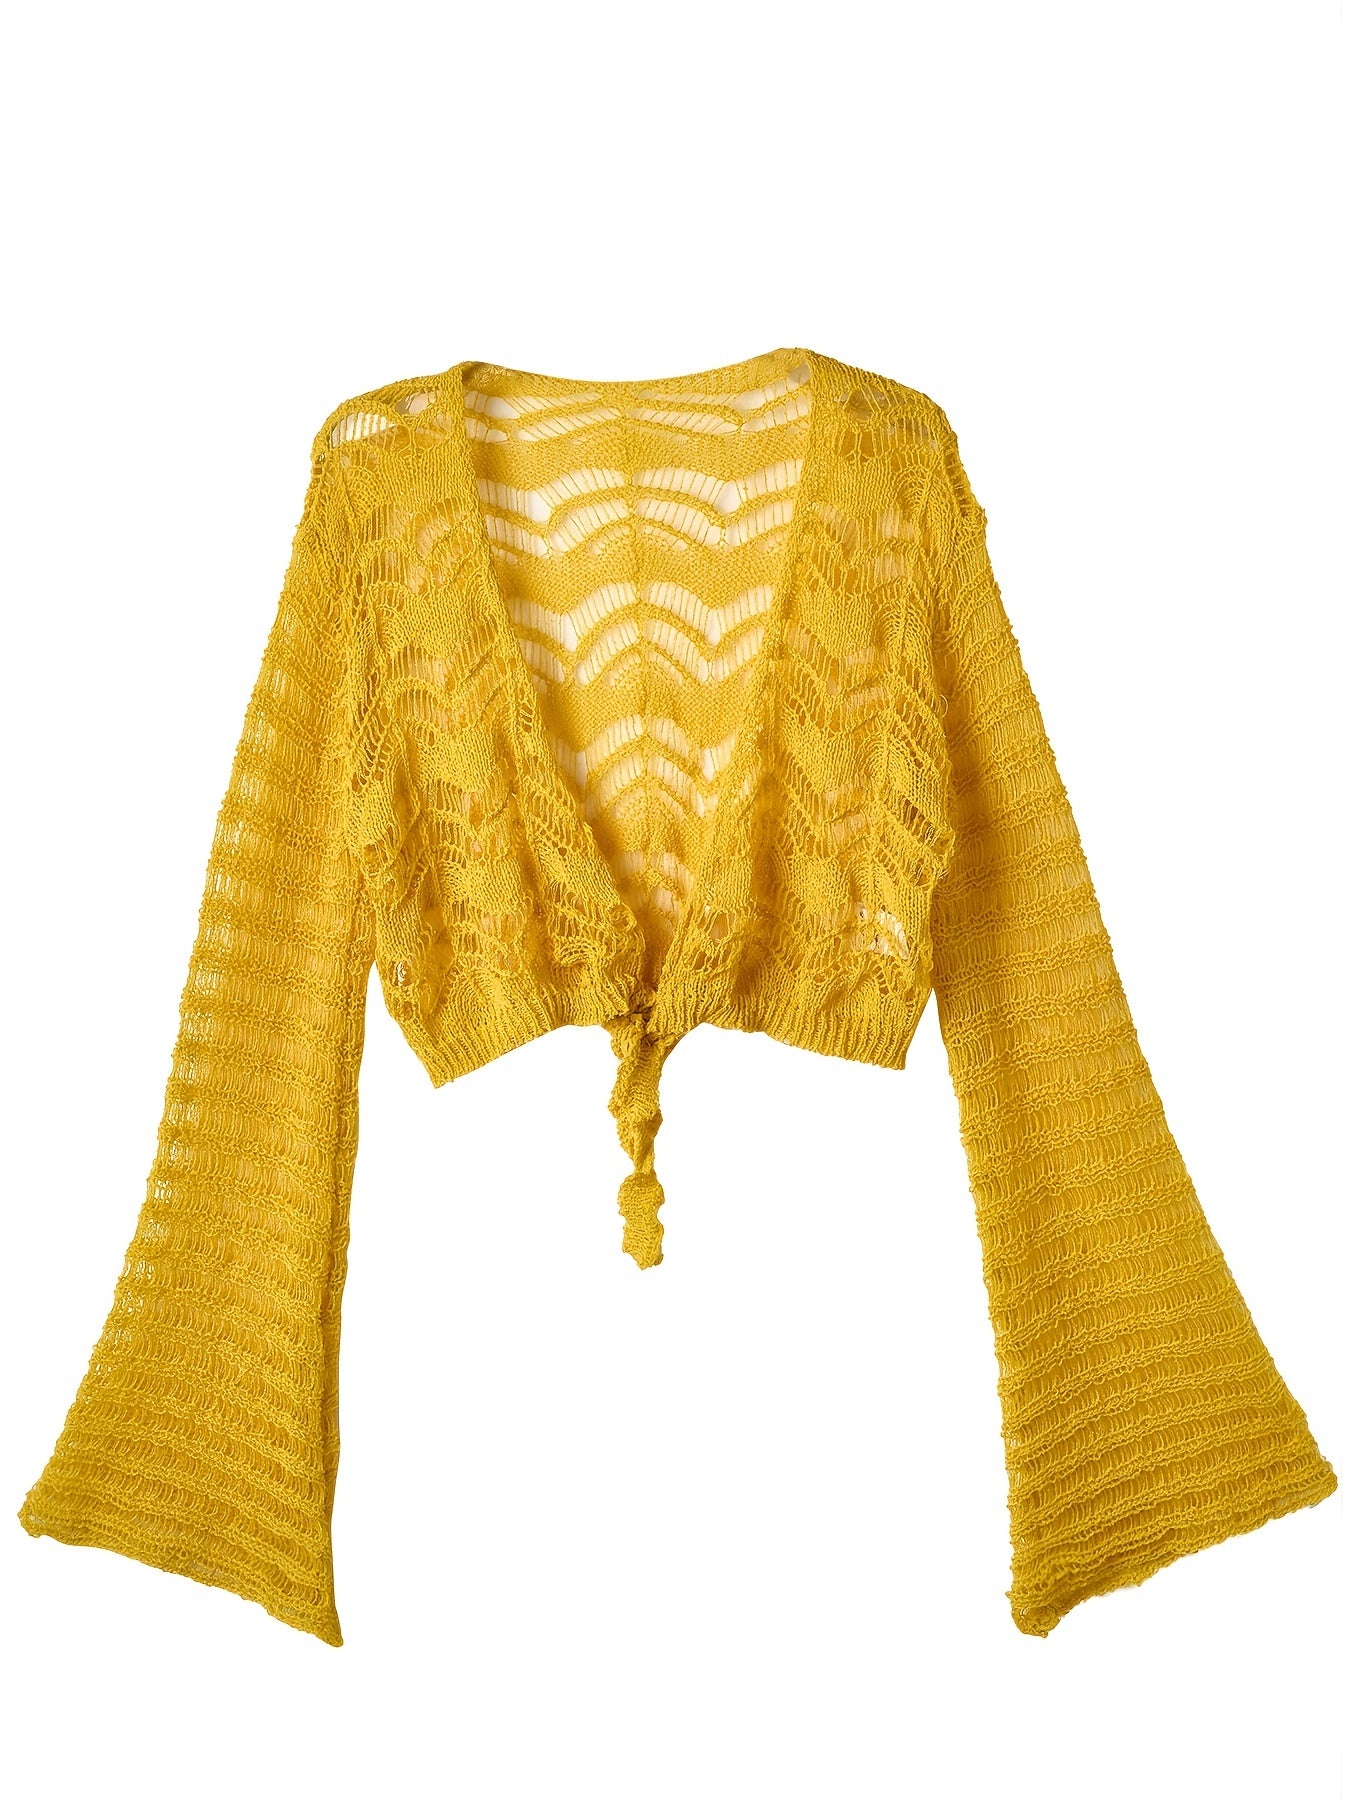 vlovelaw Crochet Cropped Knit Cardigan, Boho Flared Sleeve Solid Sweater, Women's Clothing